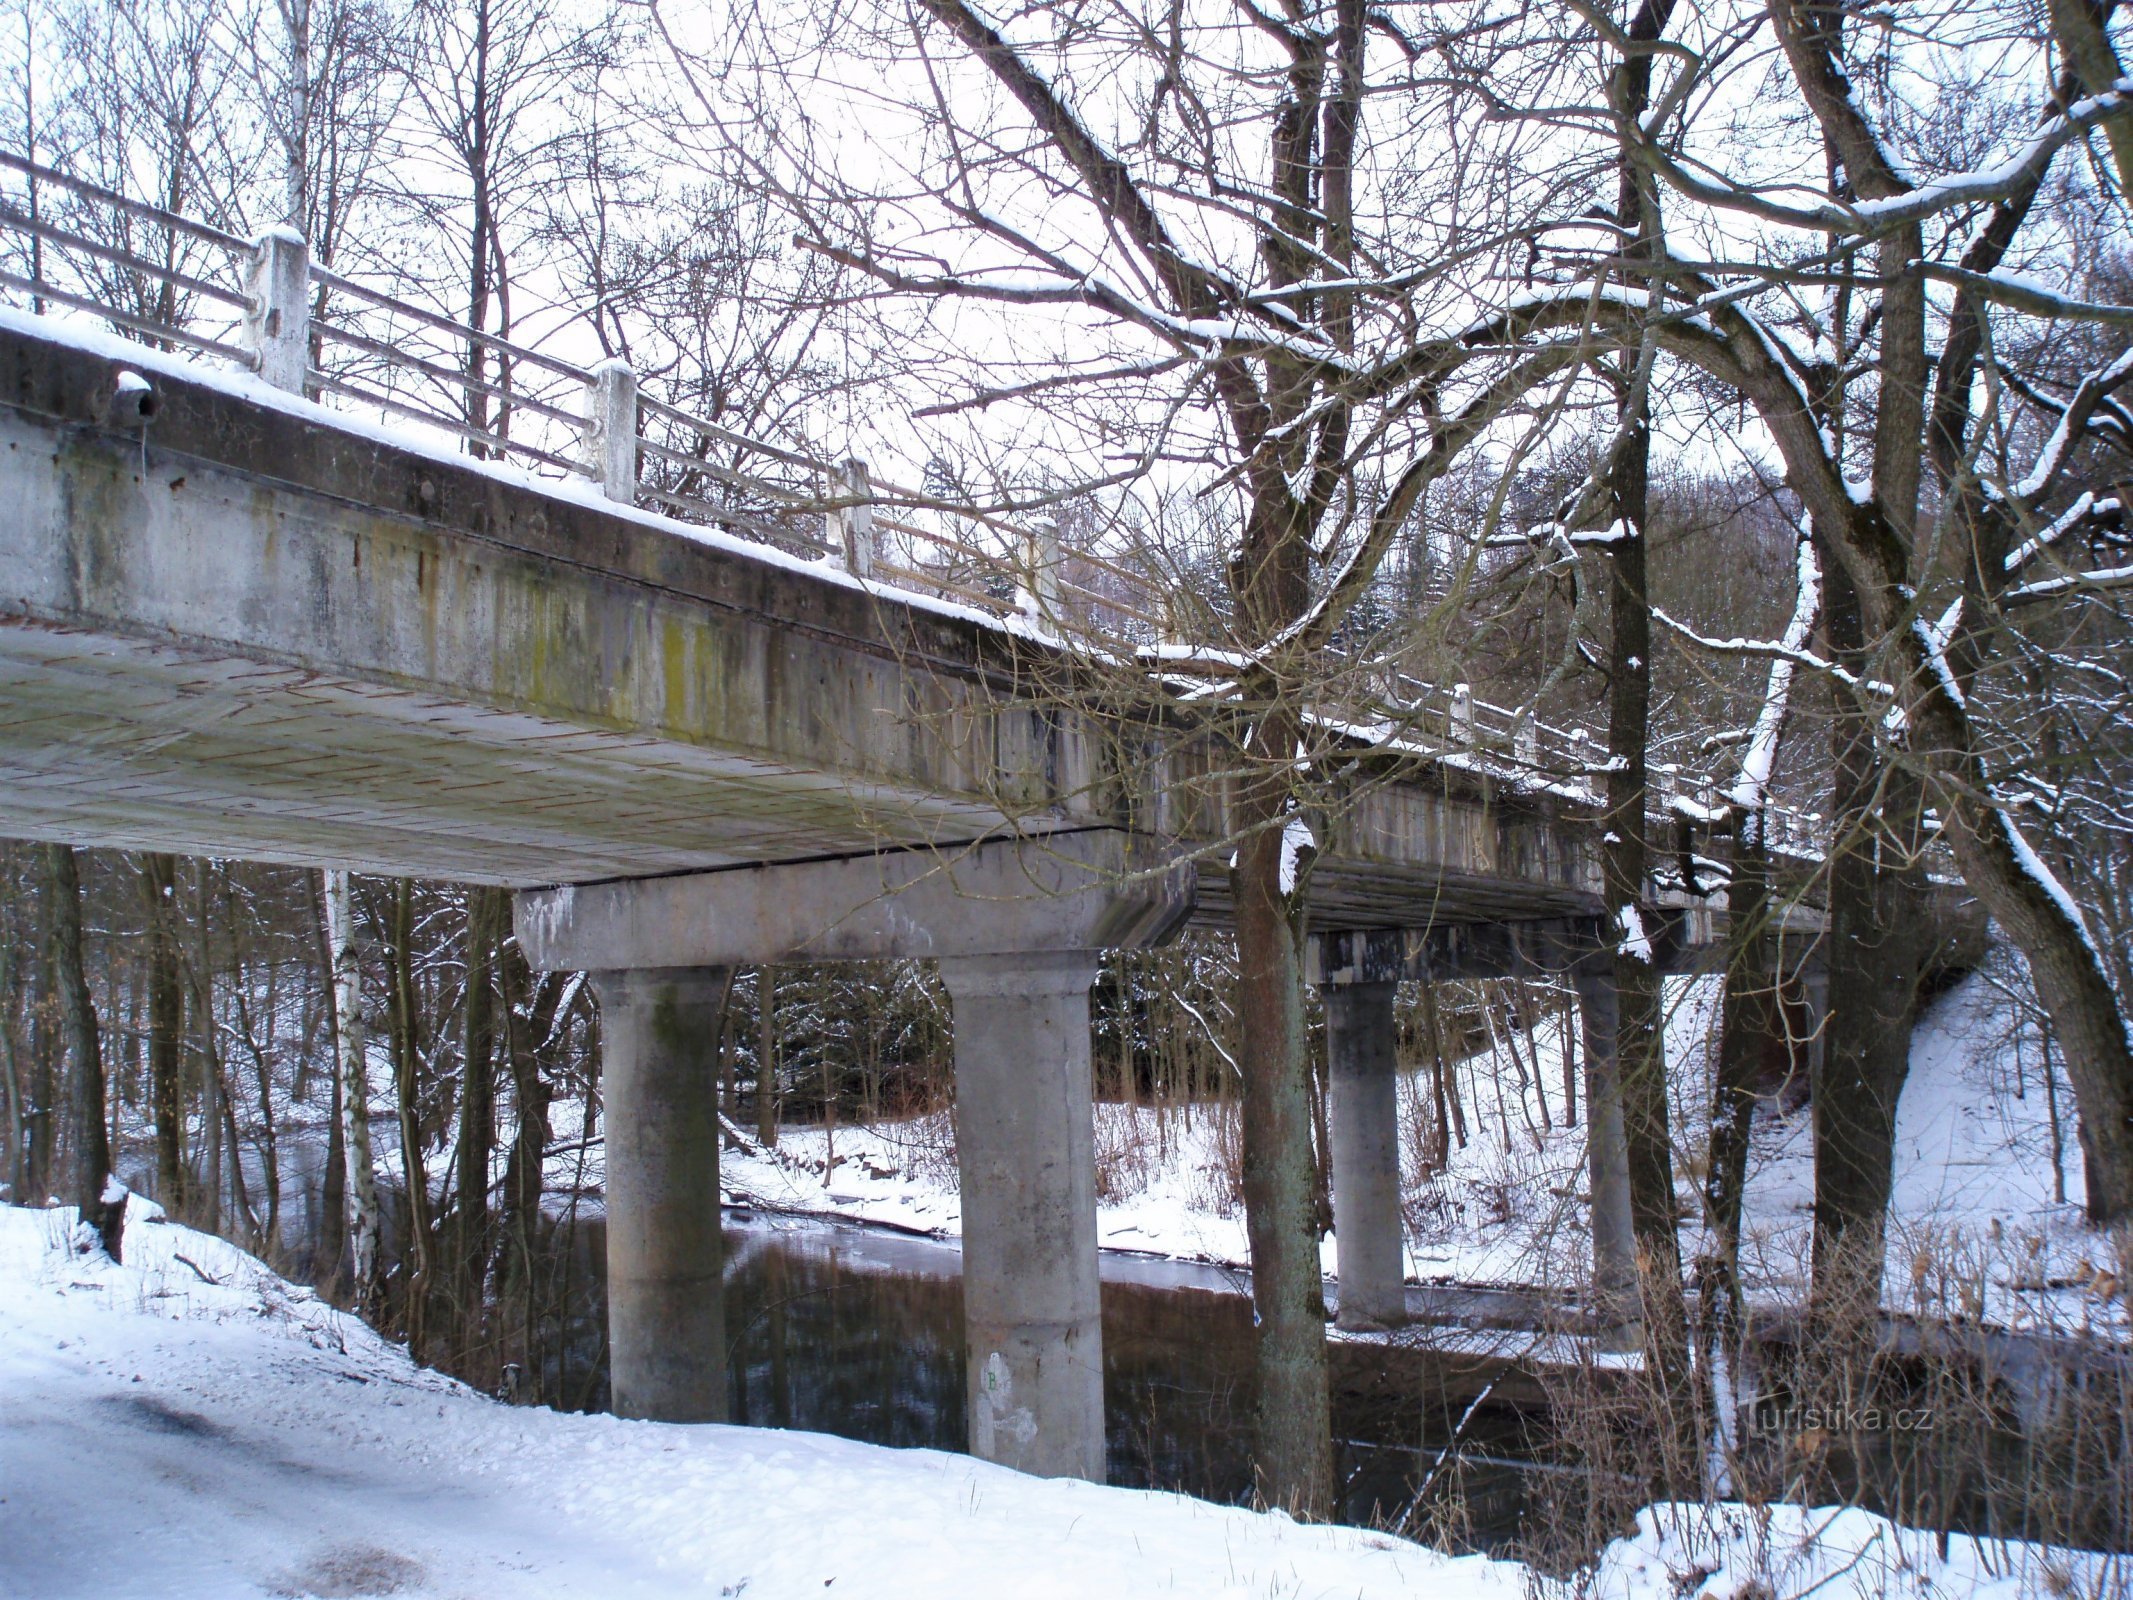 Слатинский мост до реконструкции (Слатина-над-Упоу)